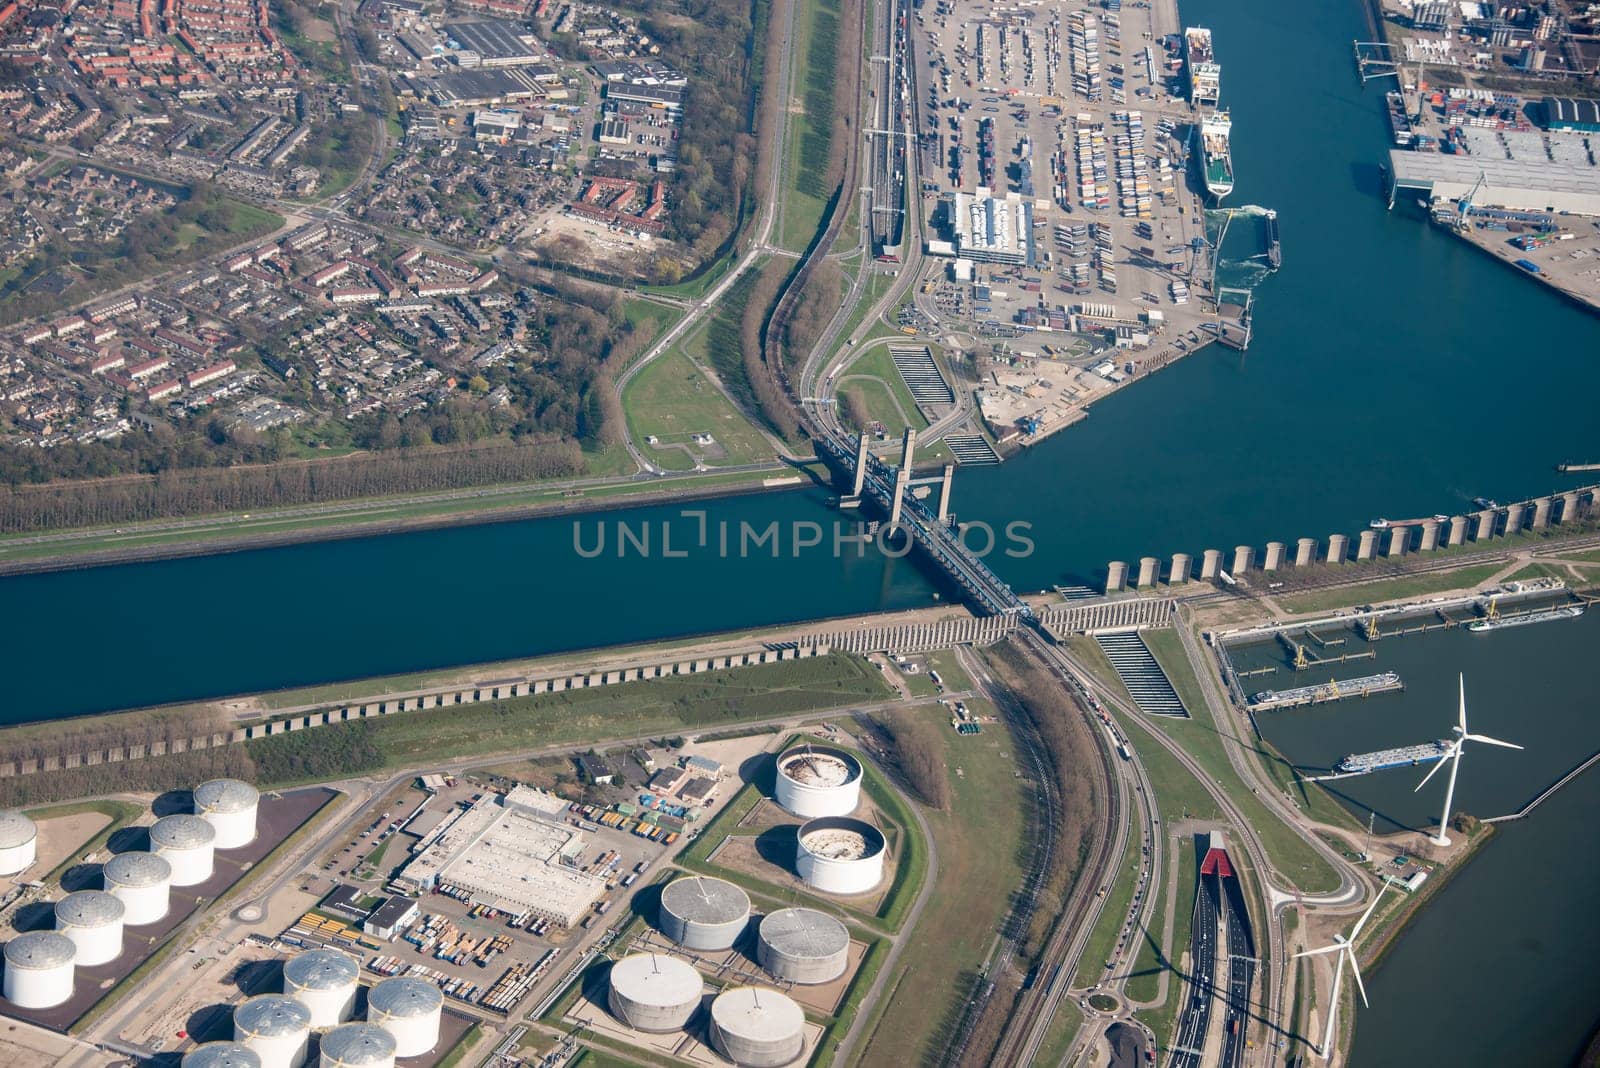 europoort oil tanks by compuinfoto